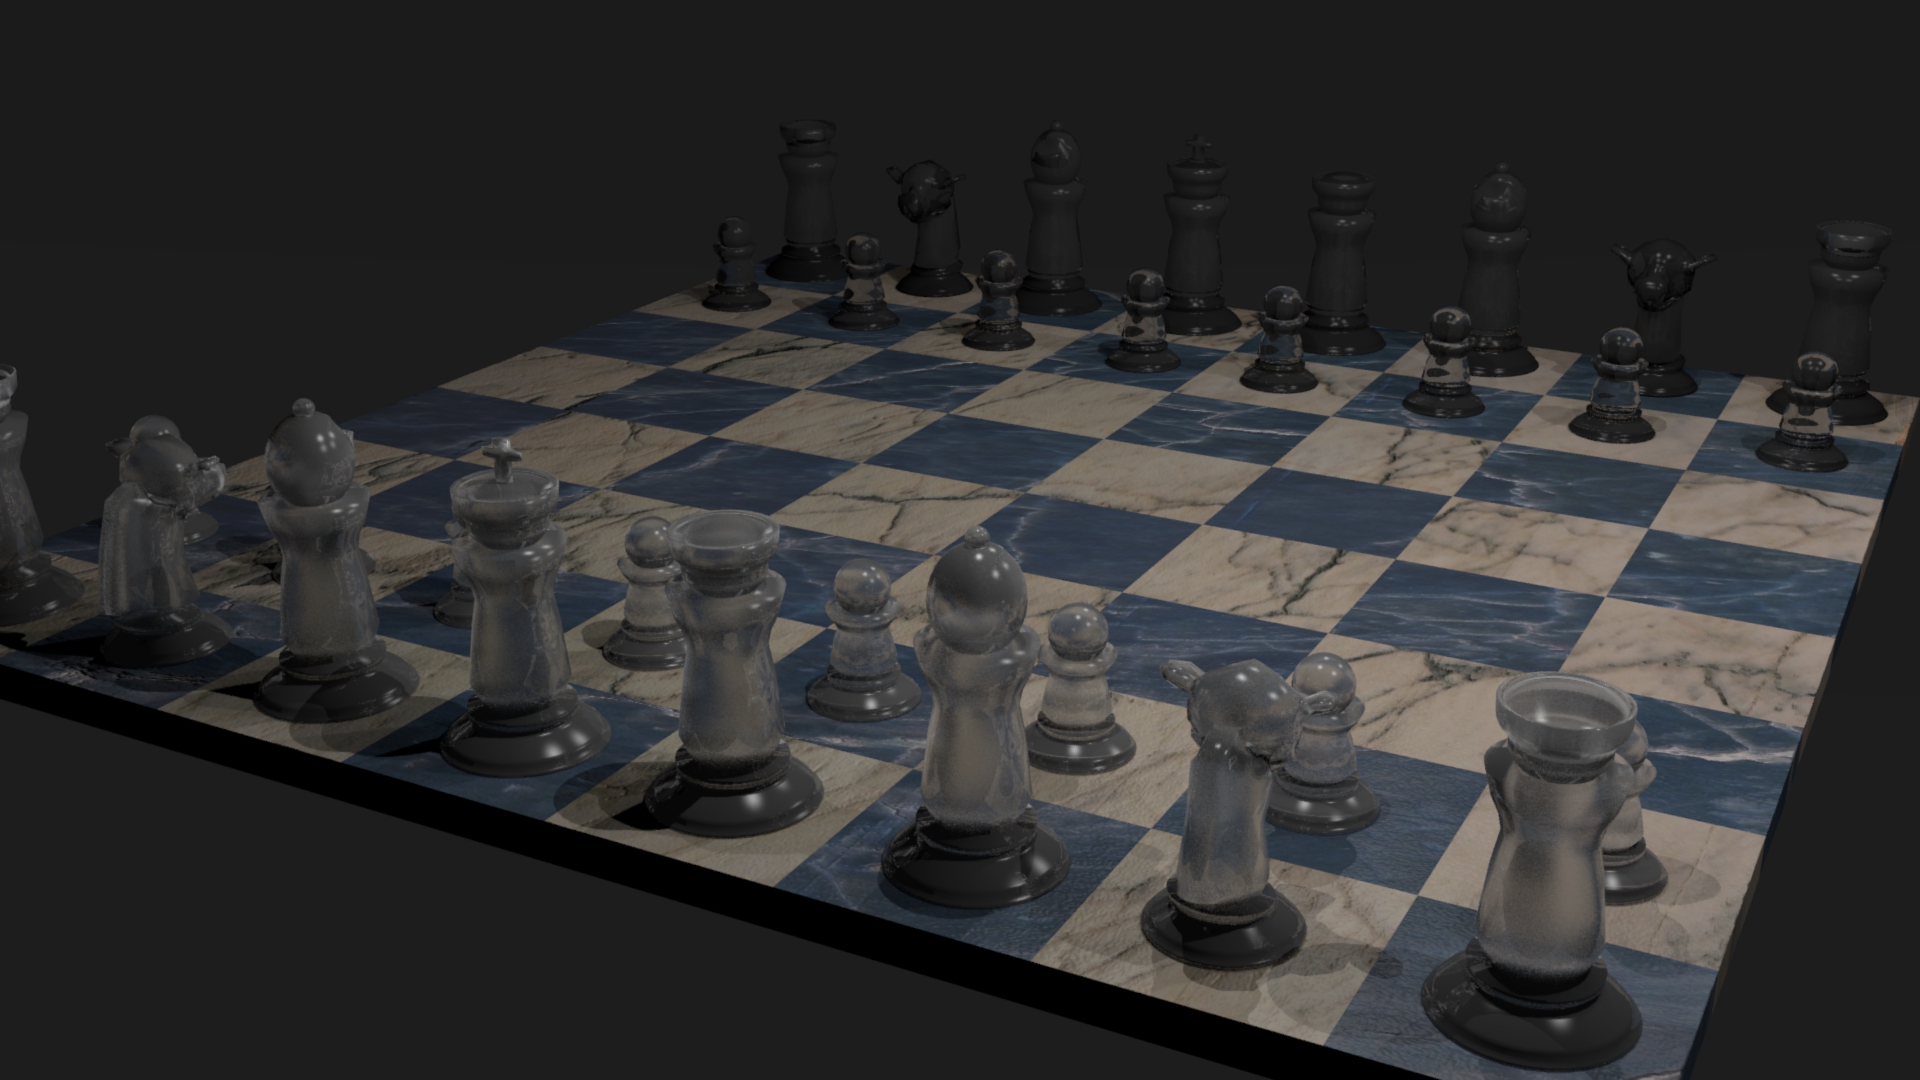 epic chess set by average-shmoejoe on DeviantArt